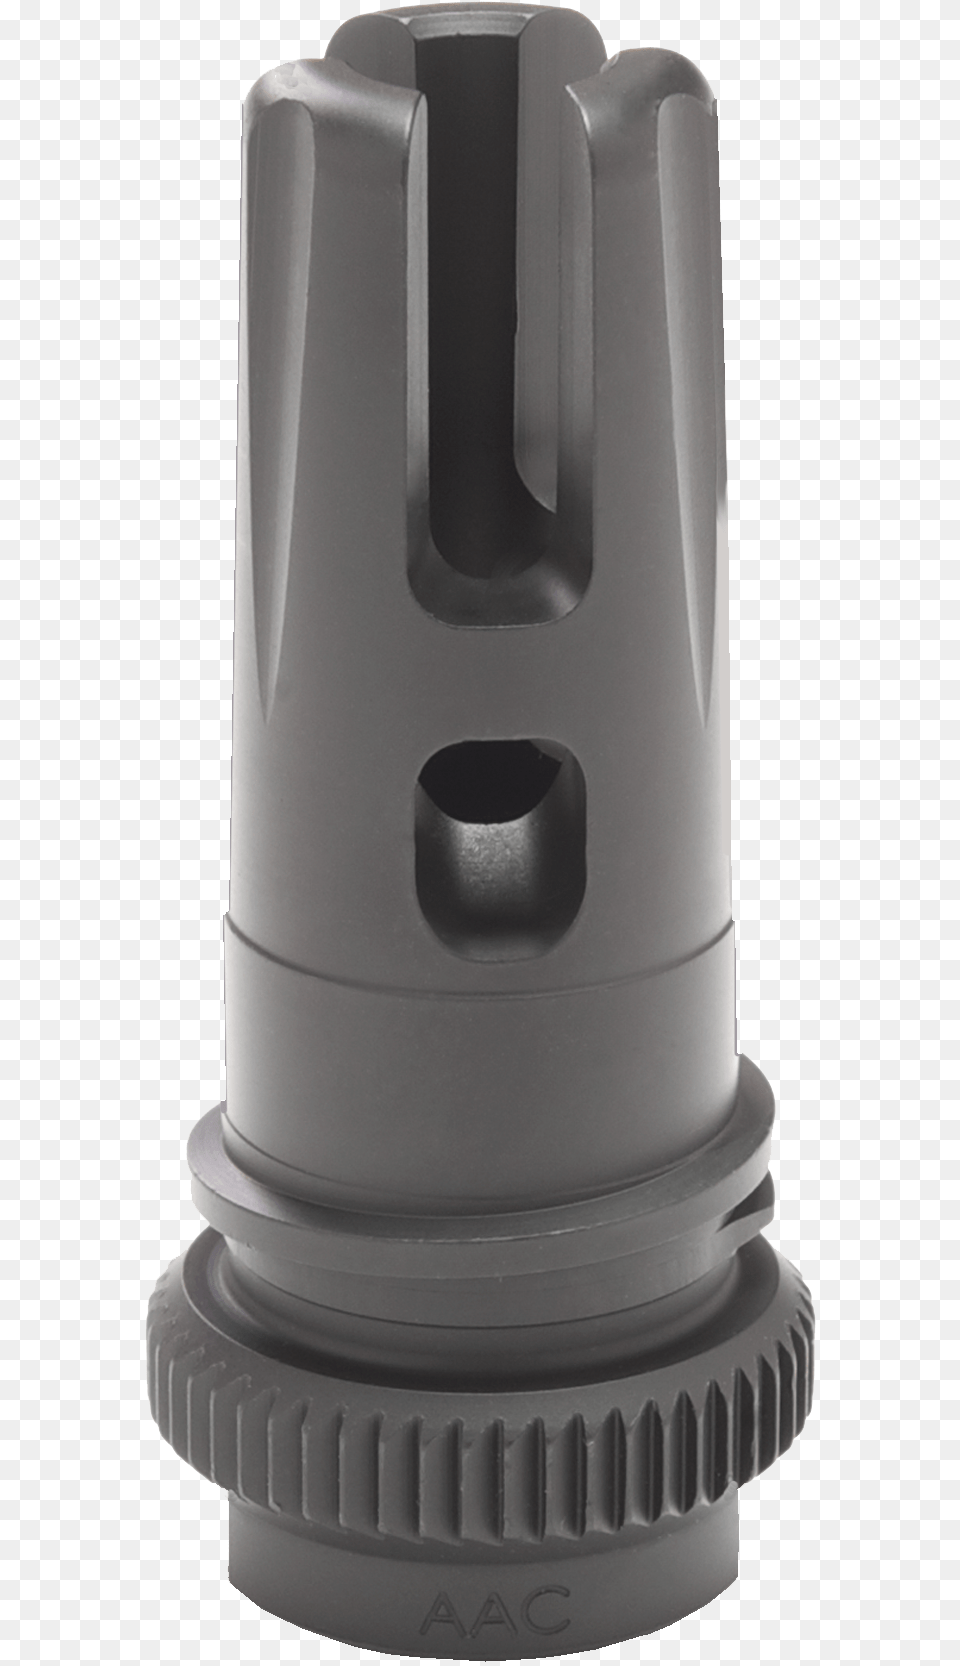 Advanced Brakeout Compensator Aac Muzzle Brake, Lamp, Machine Png Image